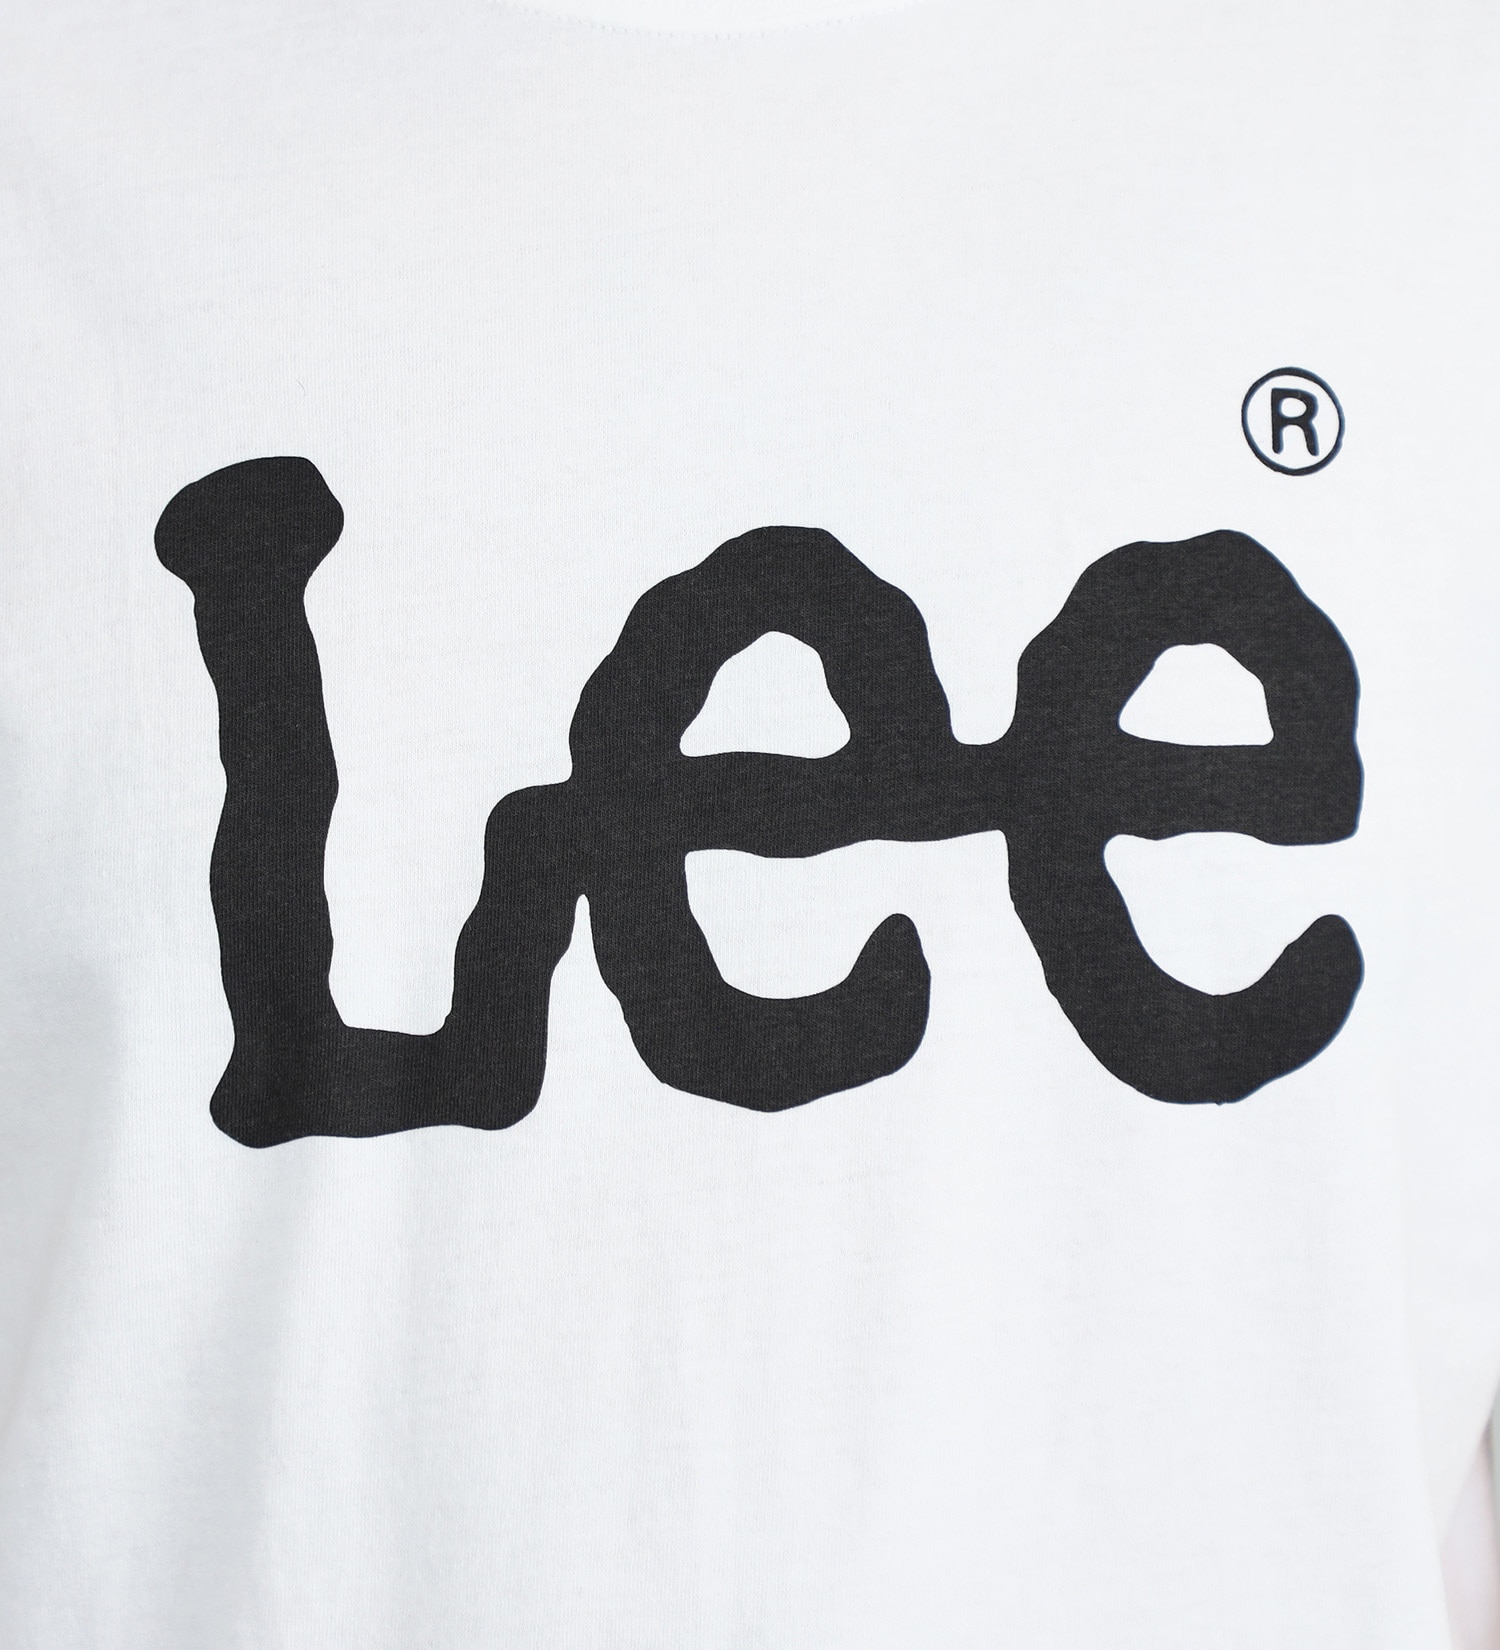 Lee(リー)のLee ロゴ ショートスリーブTee|トップス/Tシャツ/カットソー/メンズ|ホワイト